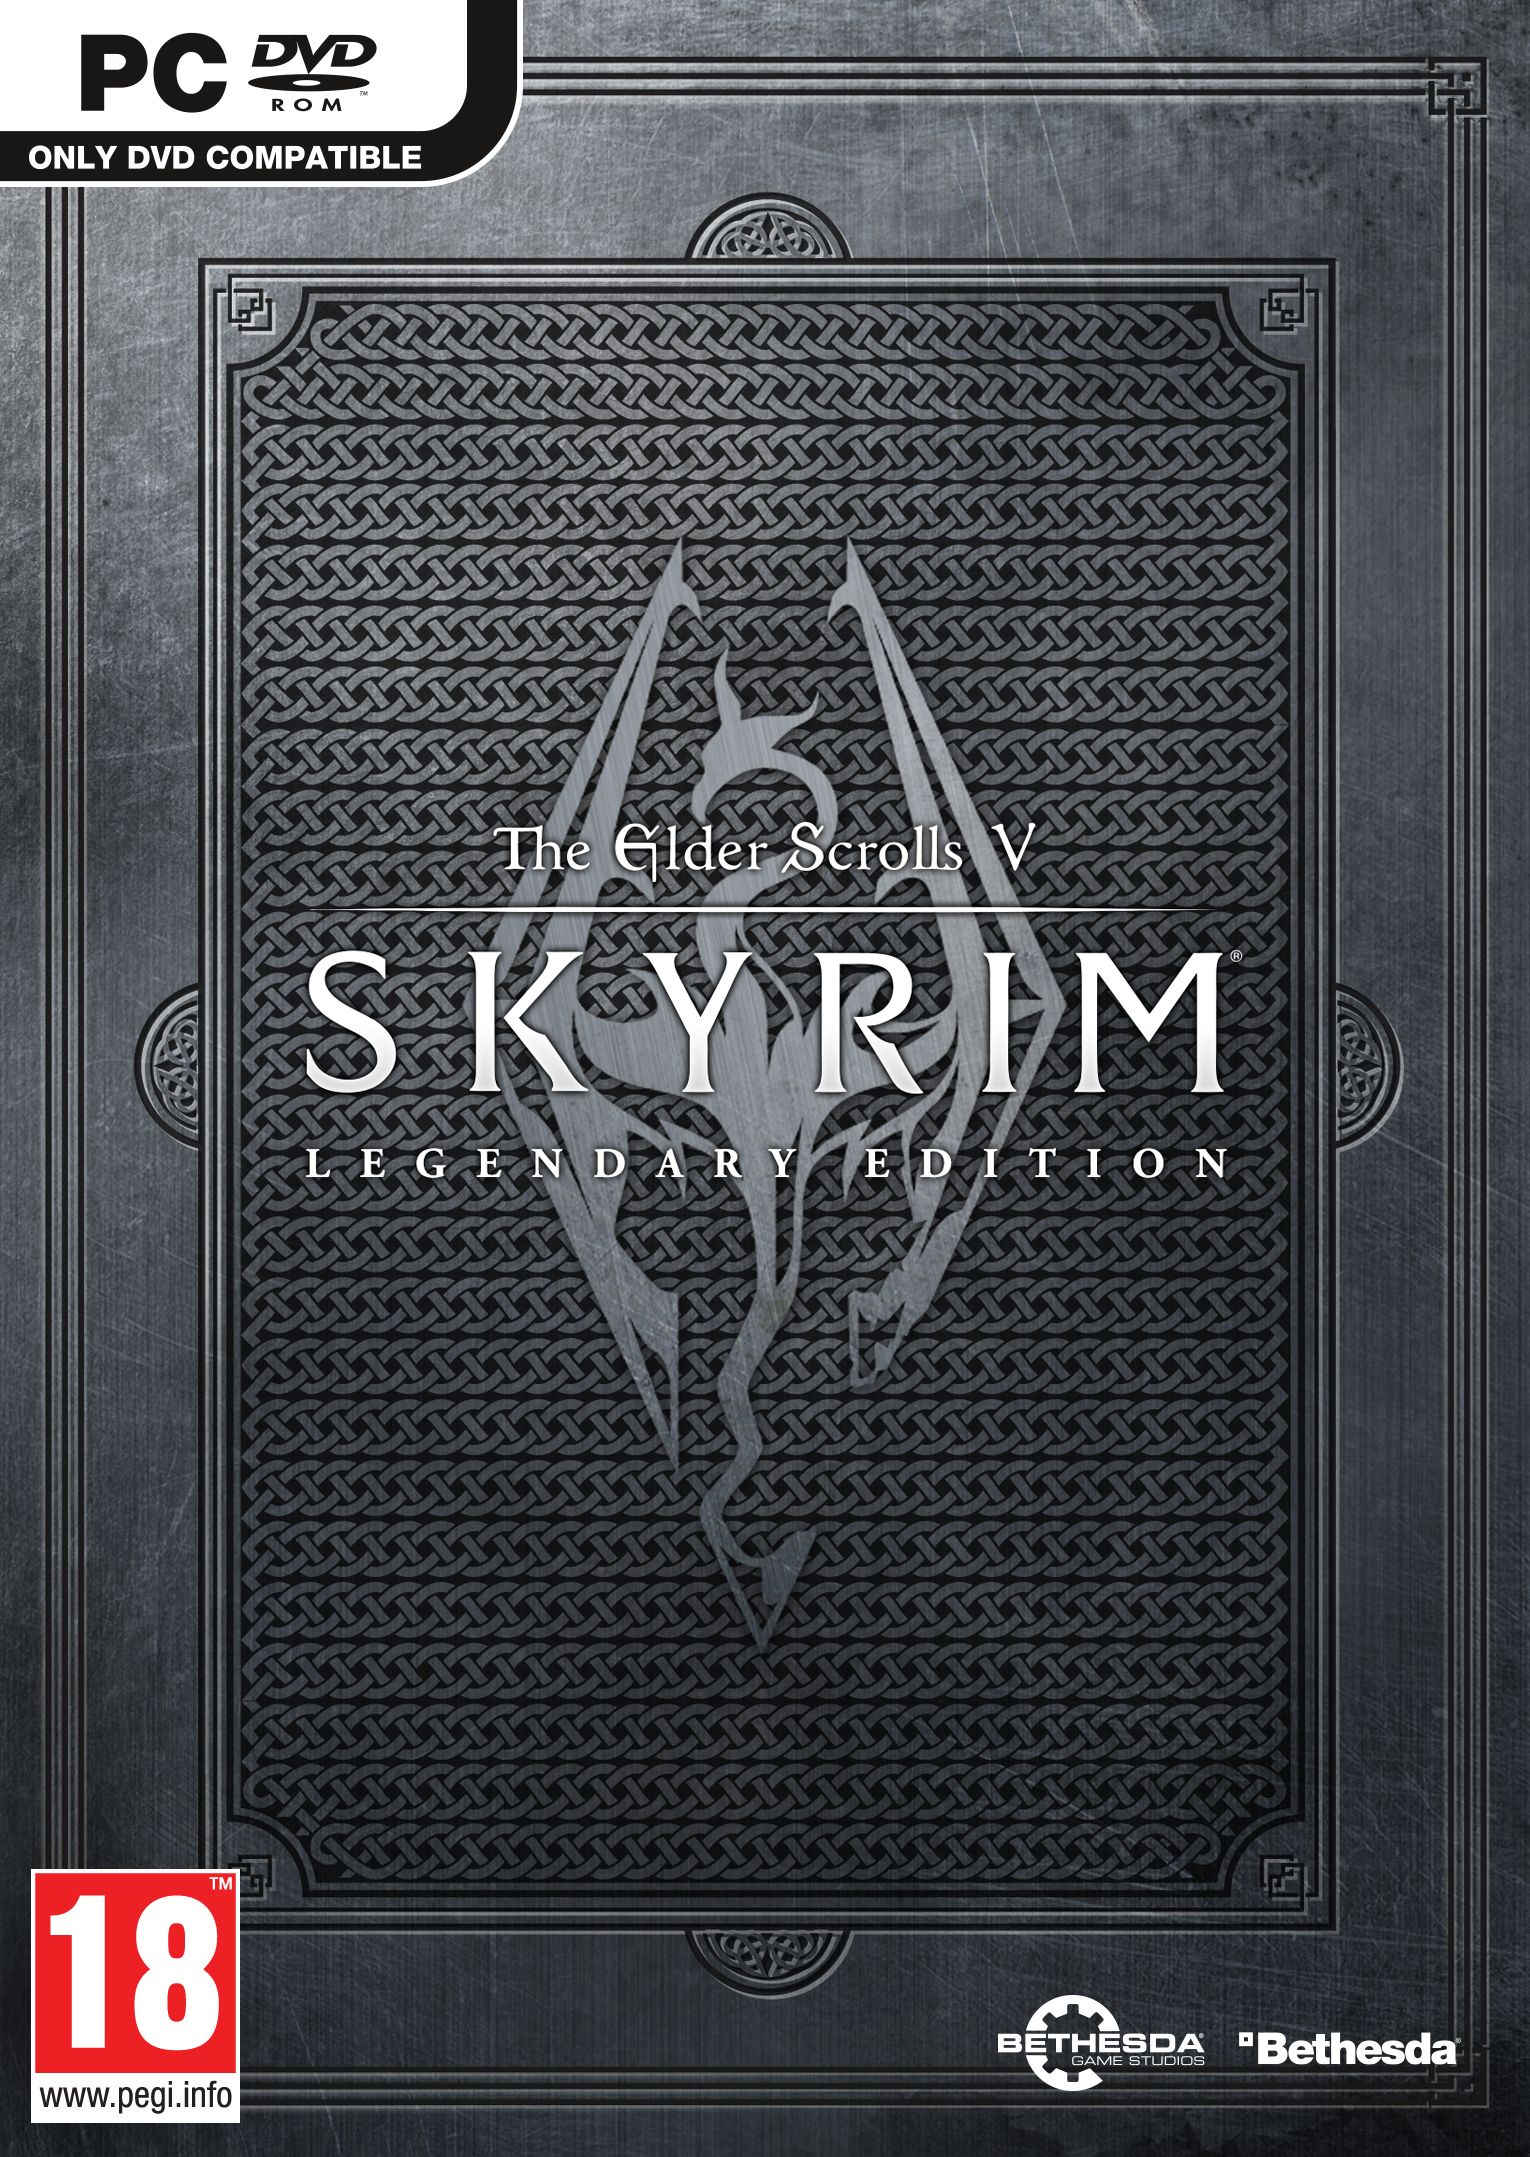 The Elder Scrolls V : Skyrim Legendary Edition